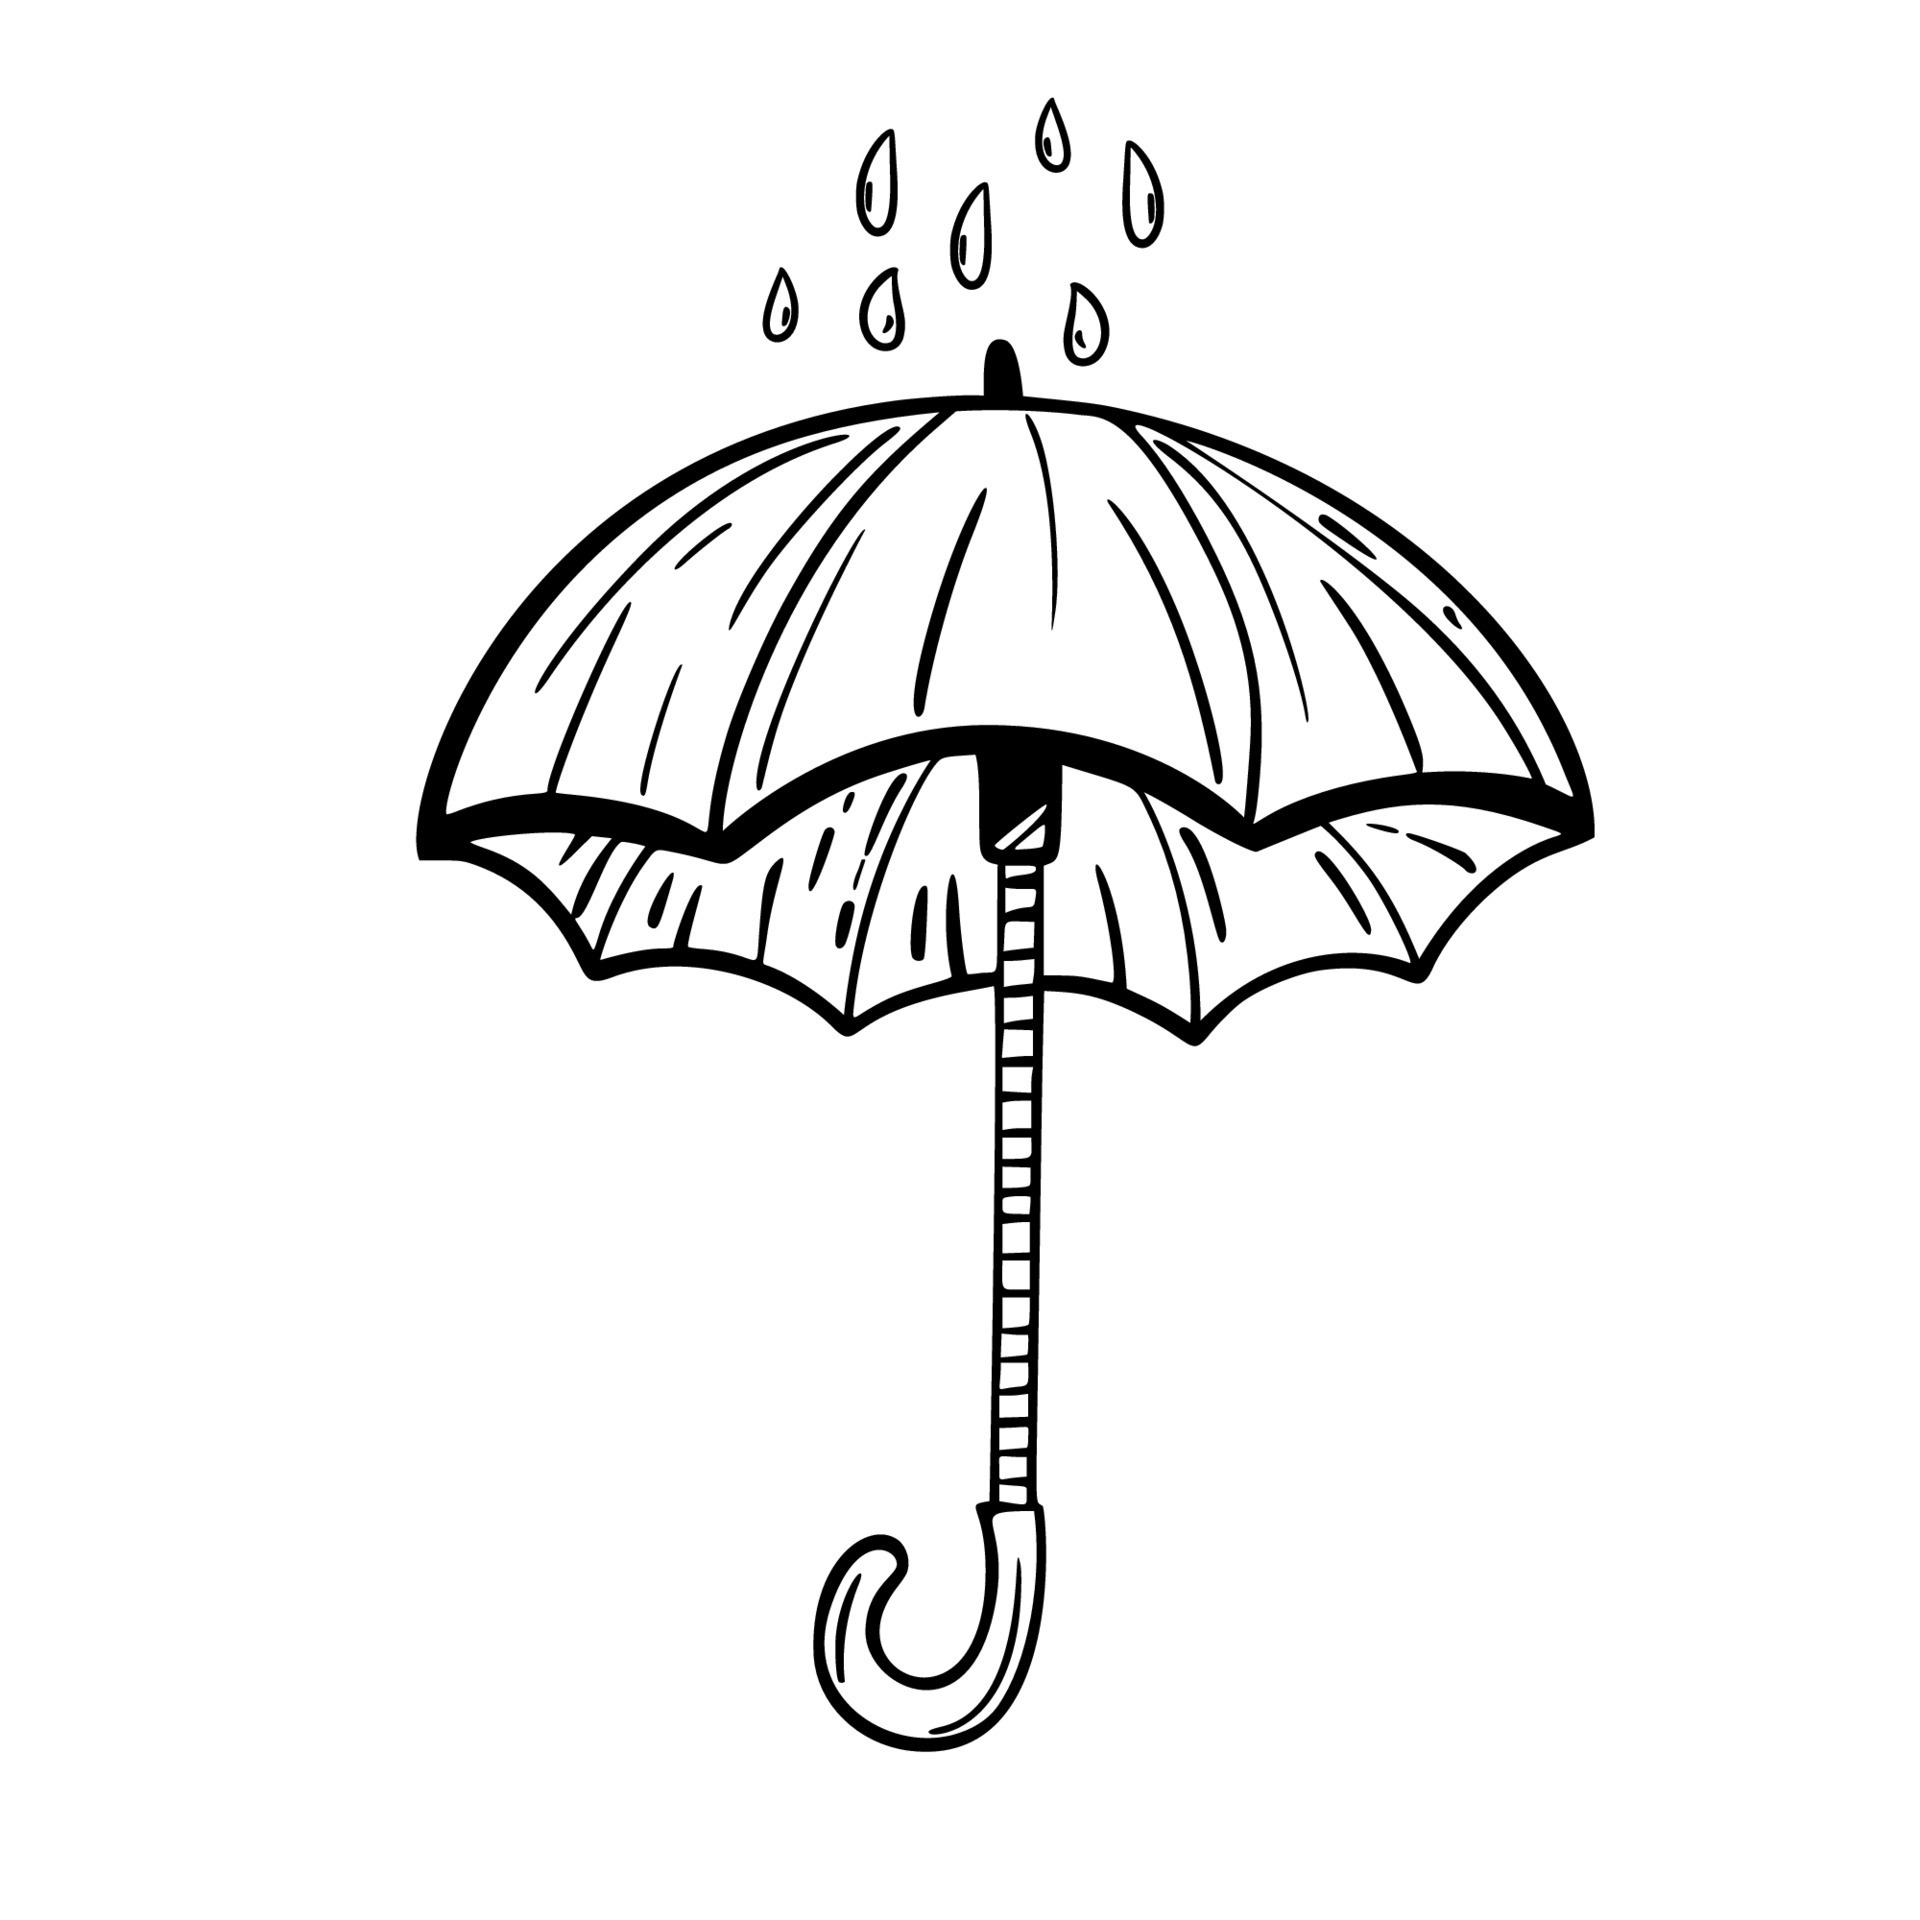 Share more than 80 sketch of an umbrella super hot - in.eteachers